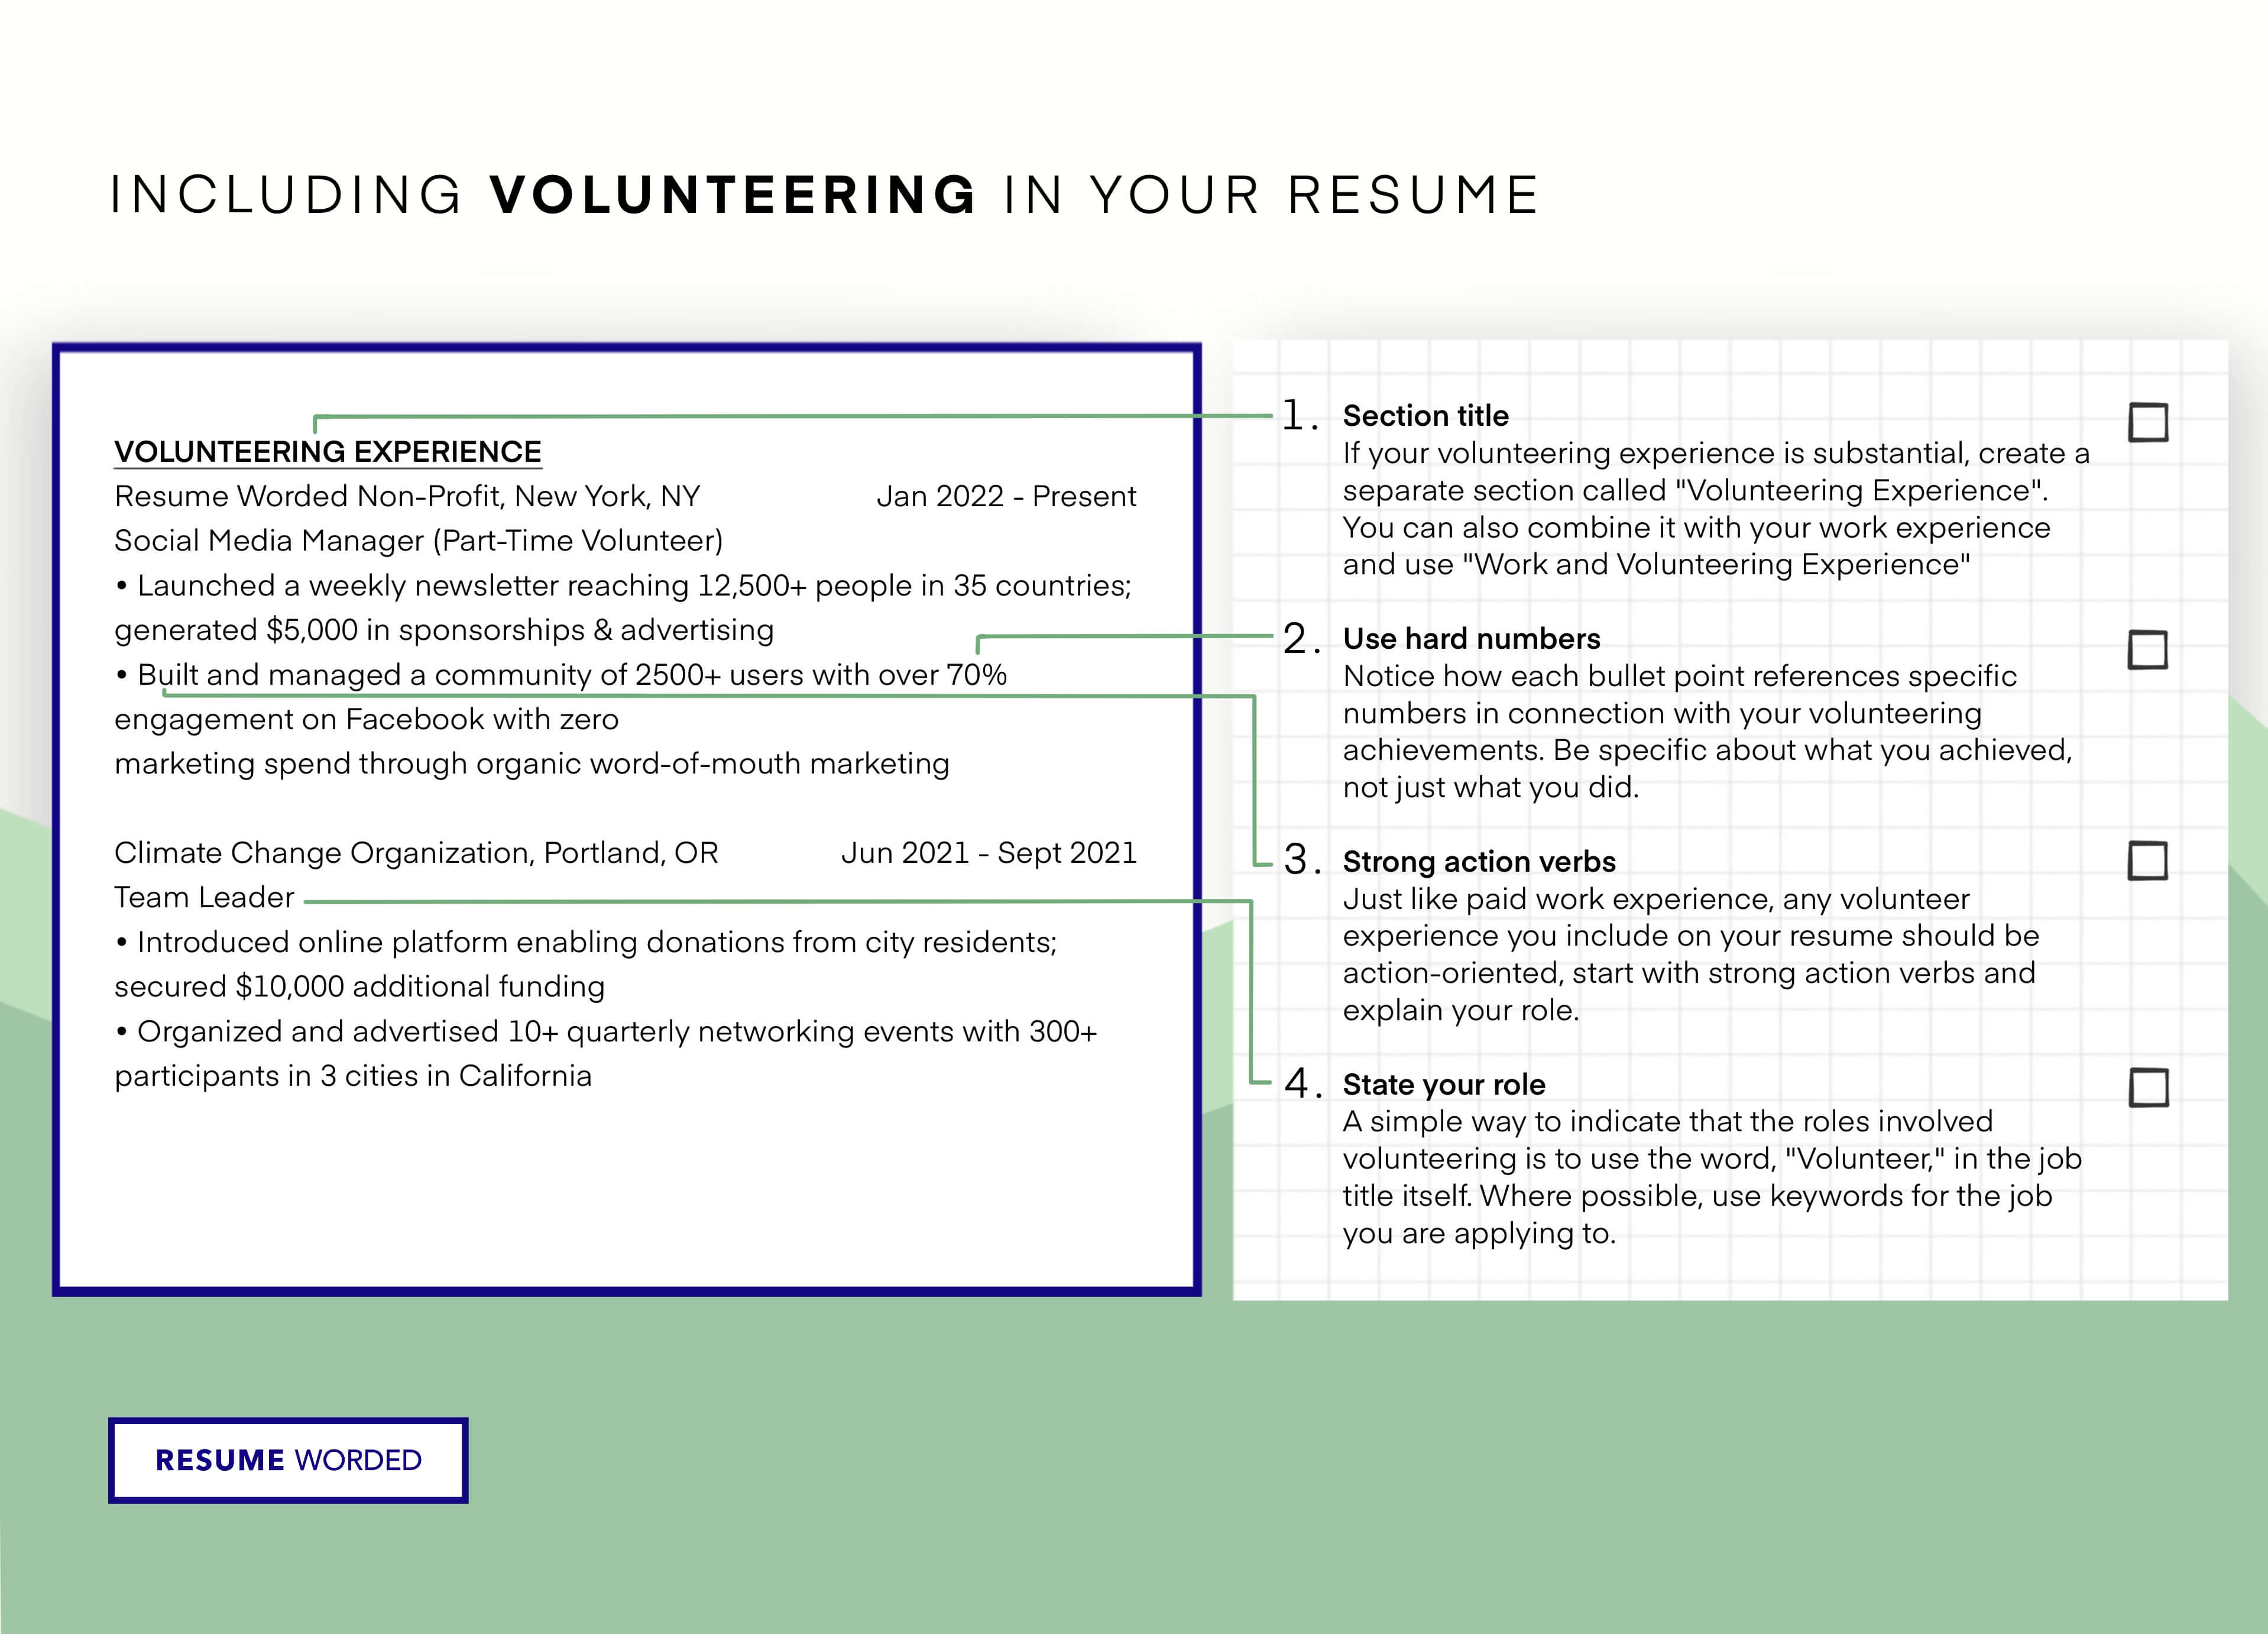 Include volunteering experience. - Junior Hadoop Developer Resume